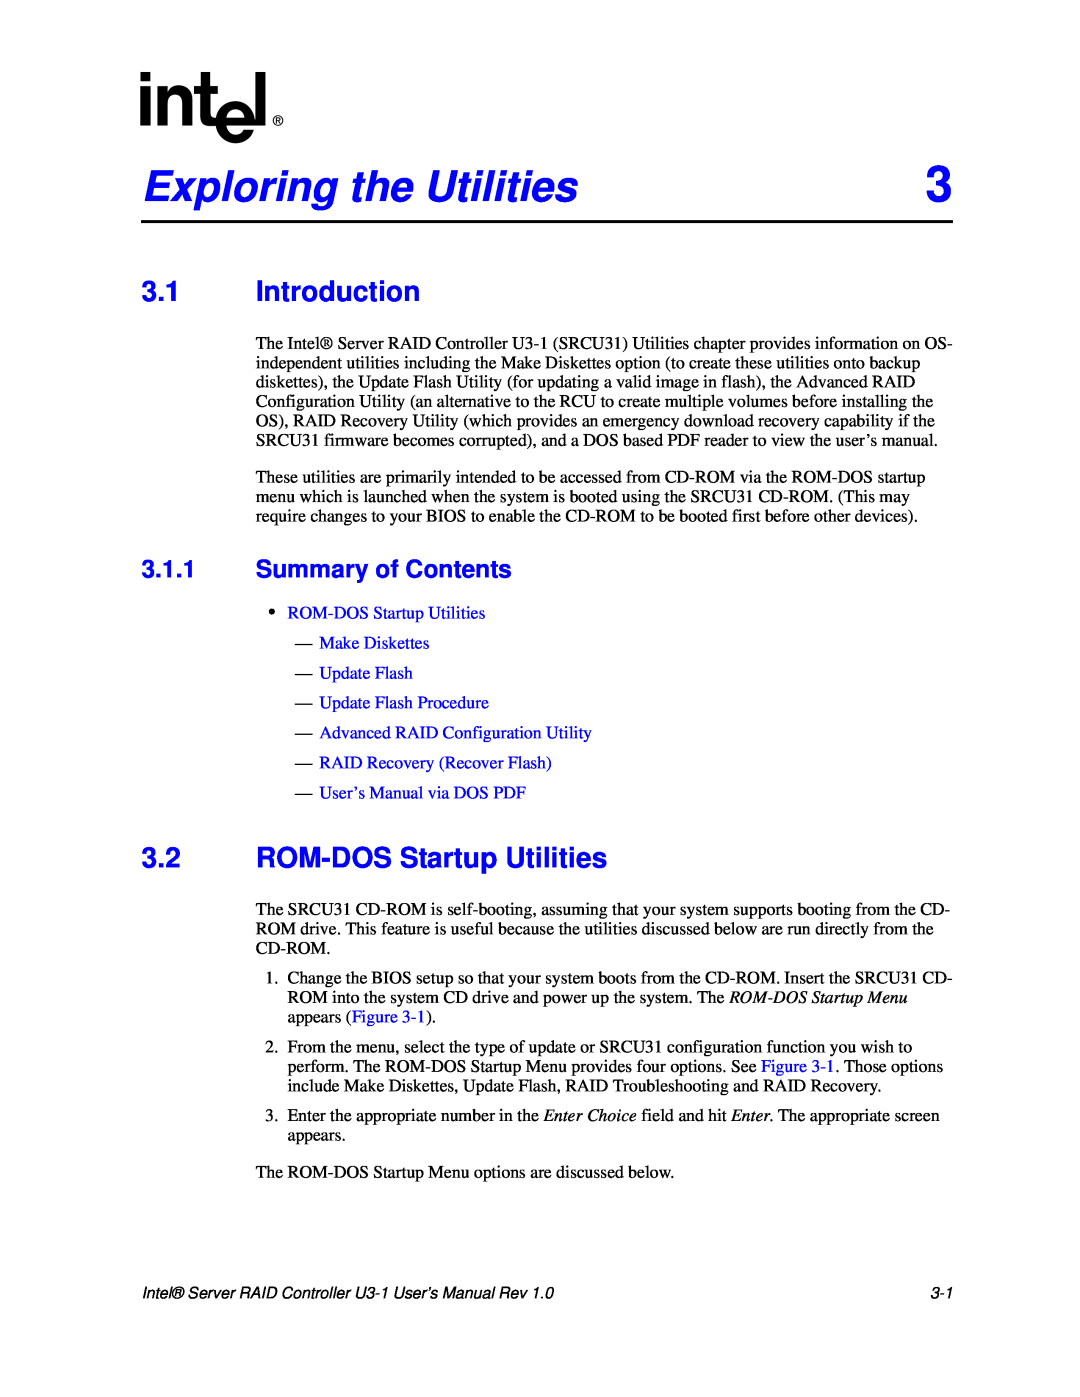 Intel SRCU31 user manual Exploring the Utilities, 3.1Introduction, 3.2ROM-DOSStartup Utilities 